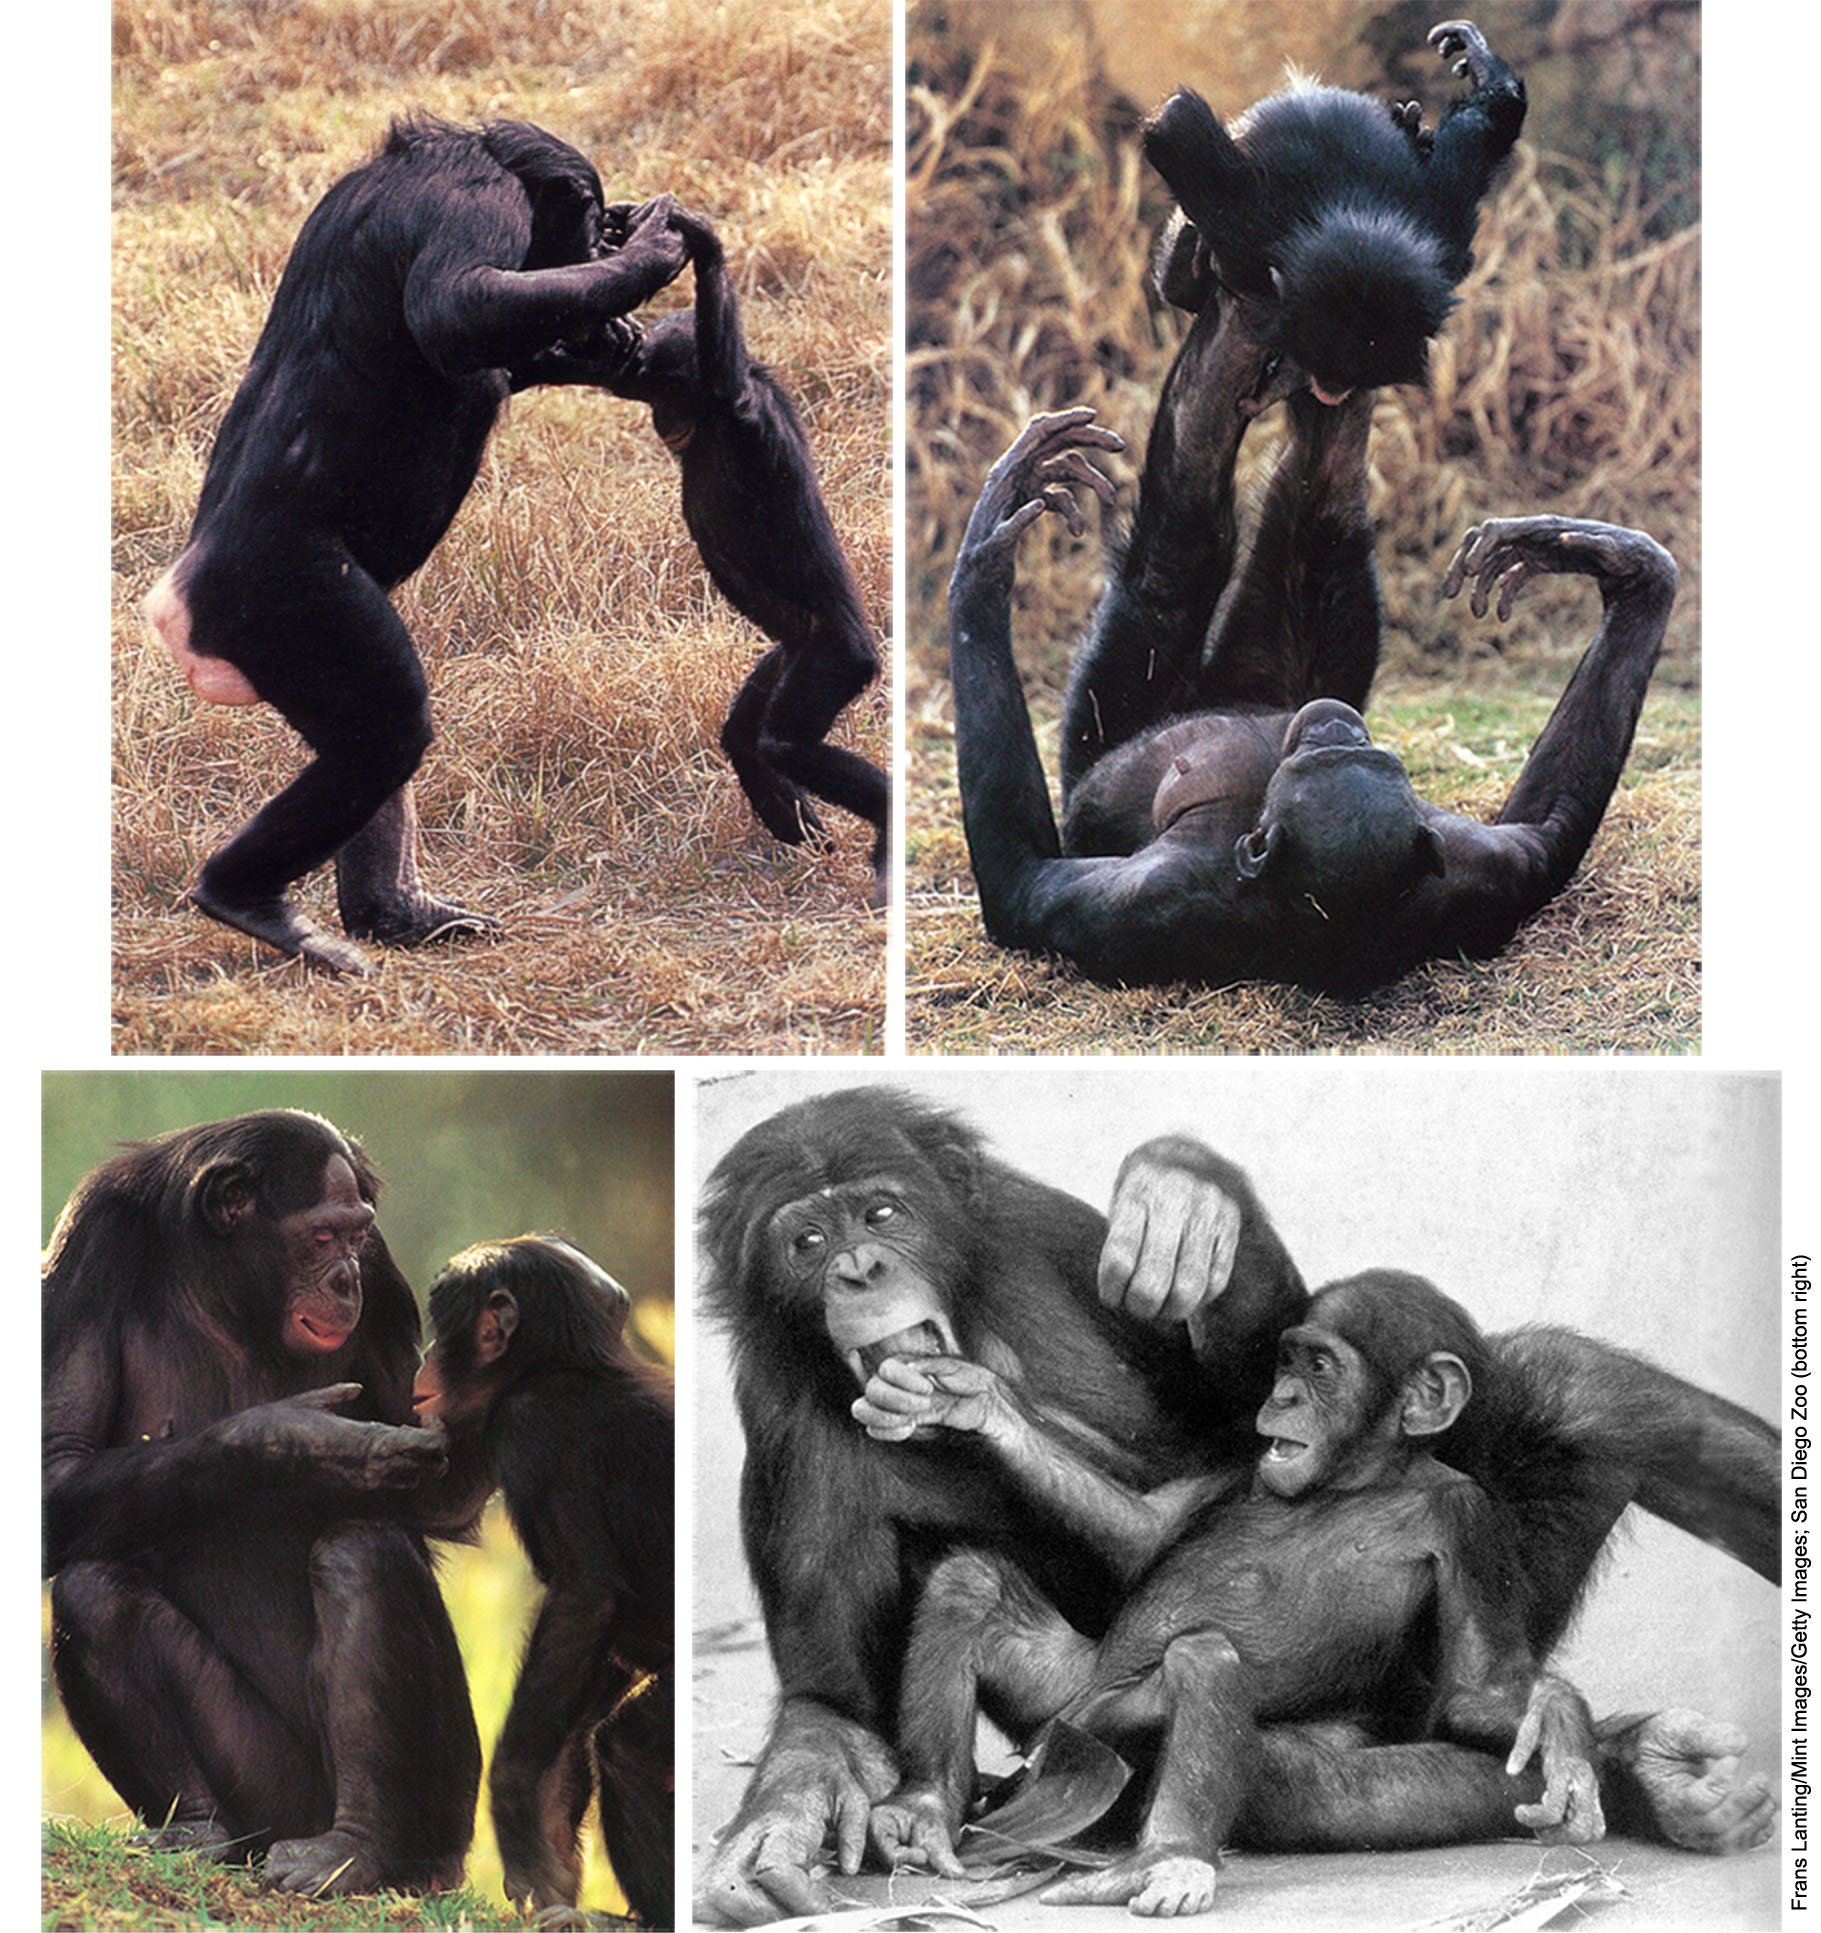 Bonobos nurturing their infants